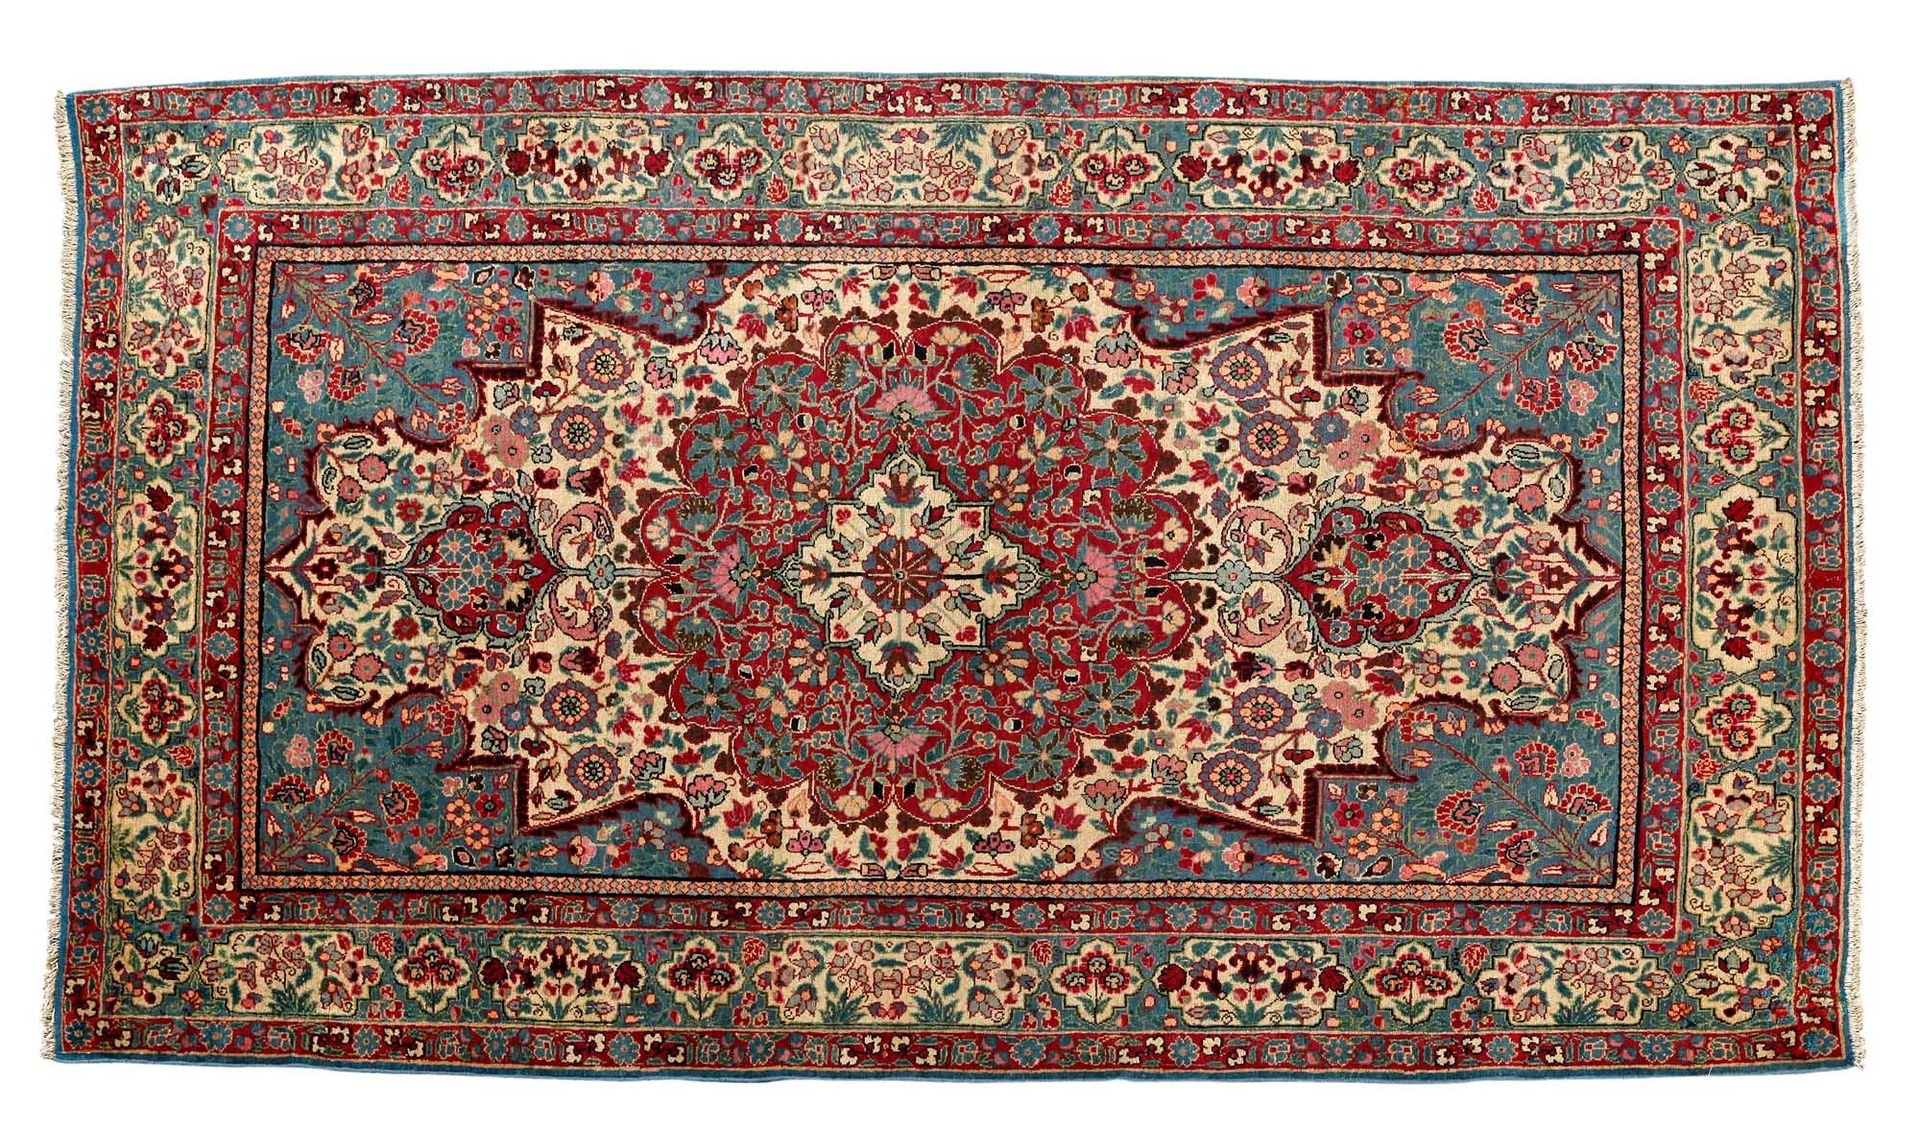 Null Tehran carpet (Persia), early 20th century

Dimensions : 227 X 145cm

Techn&hellip;